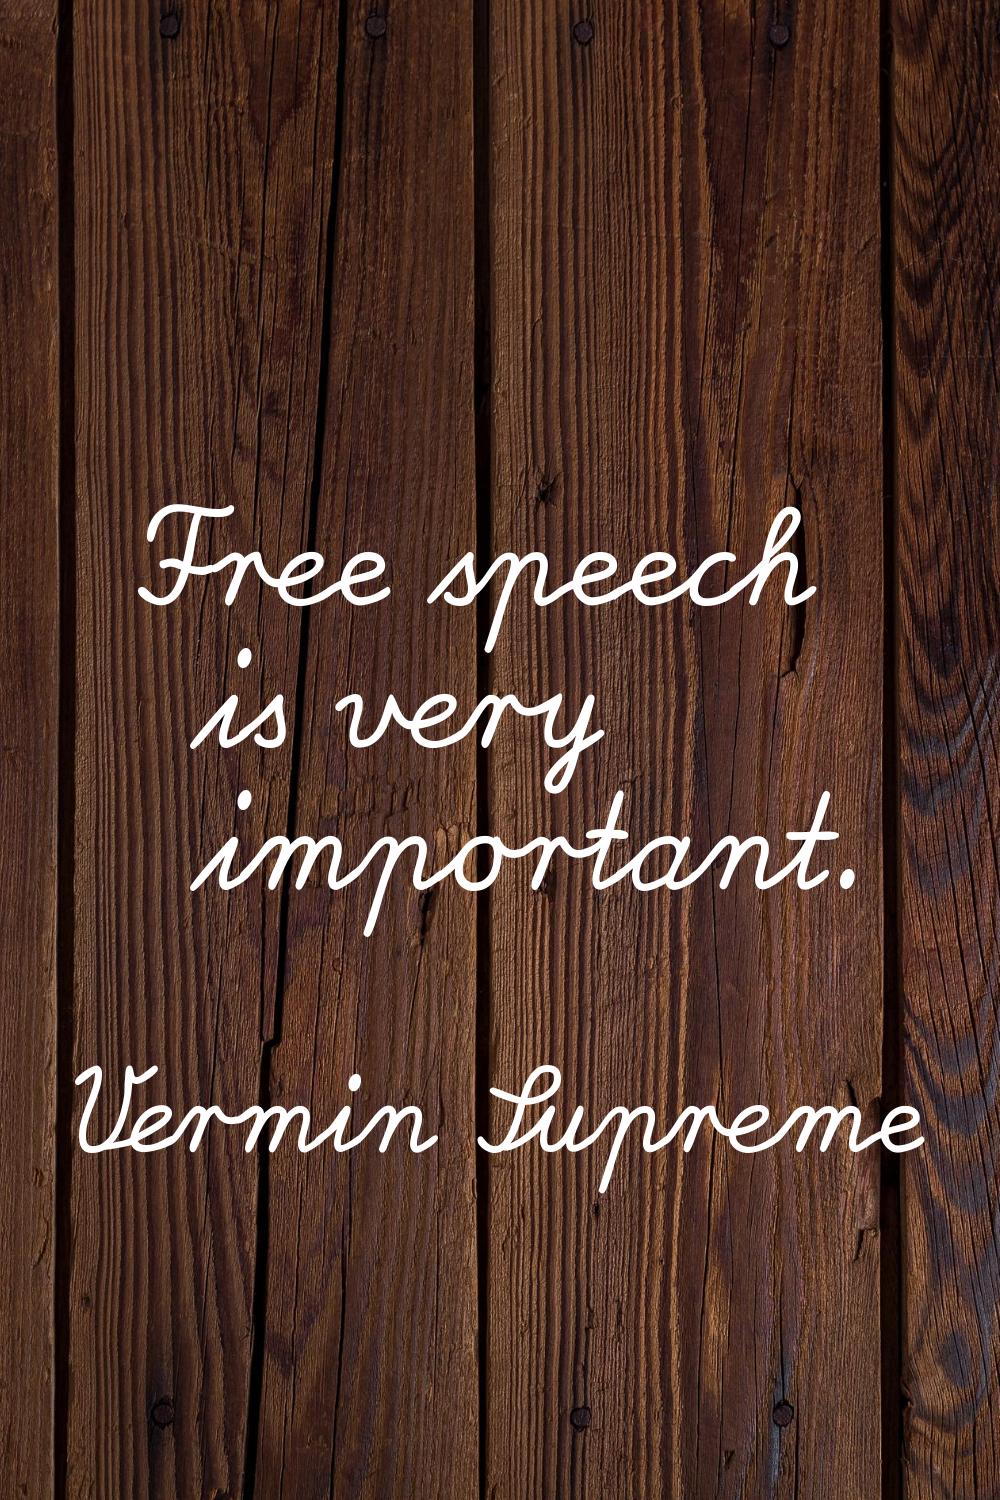 Free speech is very important.